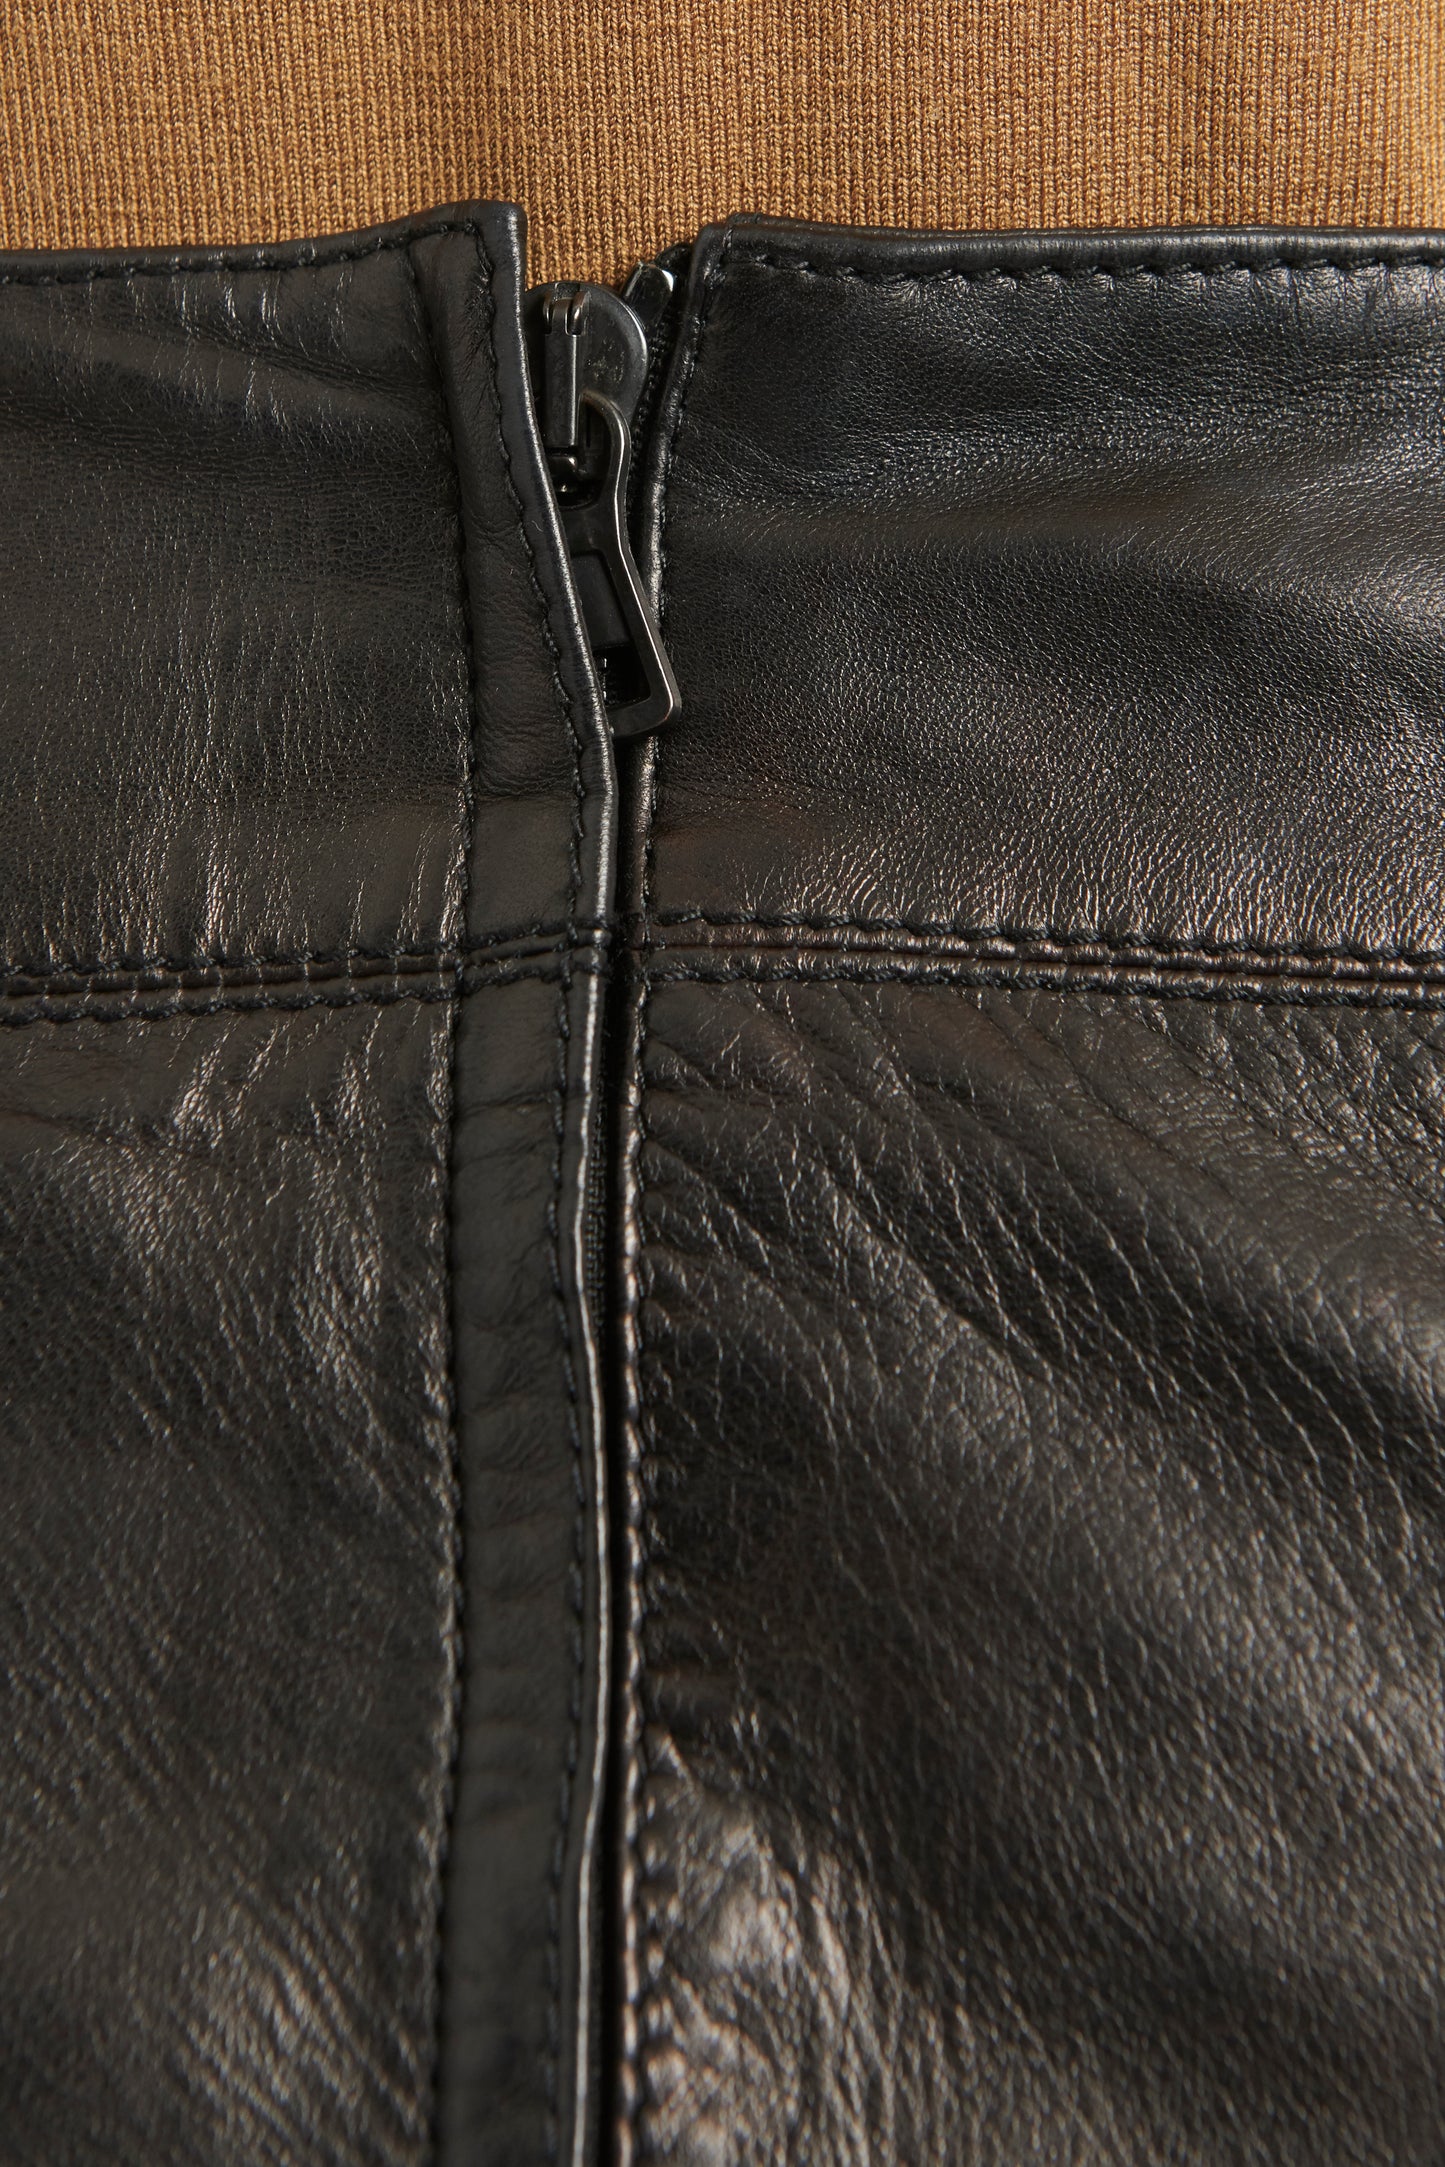 Black Leather Preowned Knee Length Skirt